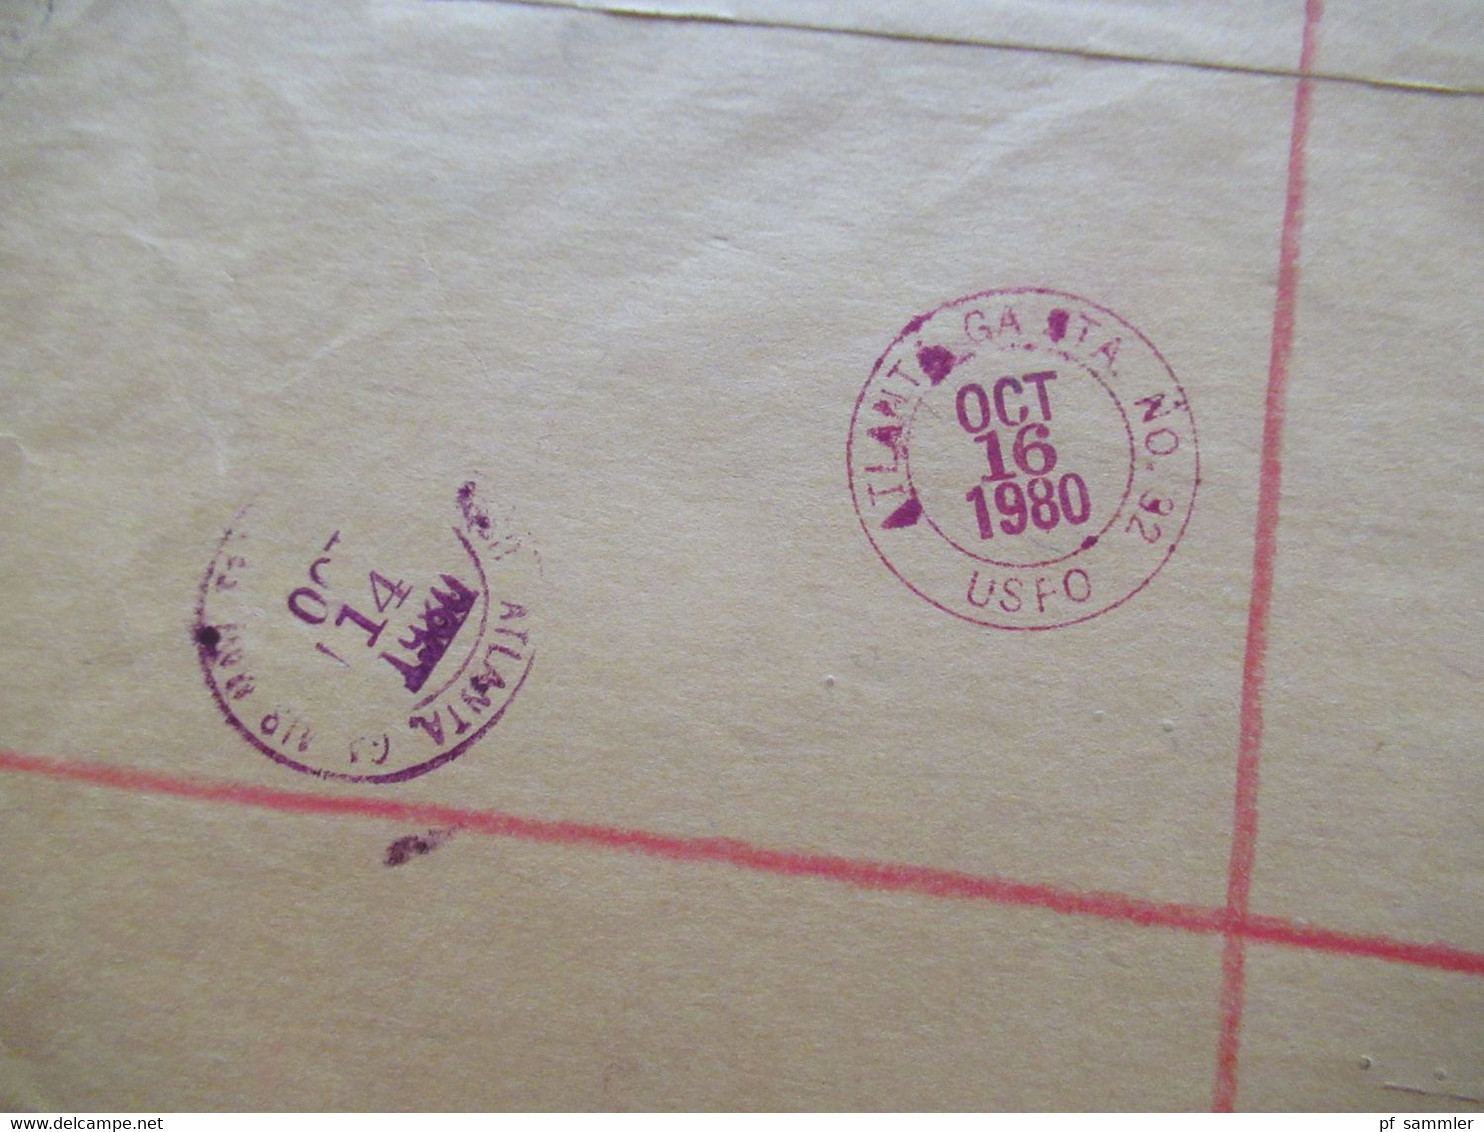 1980 Umschlag OHMS und Stempel Legislative Council Parliament House Perth W.A Einschreiben Perth Parliament House